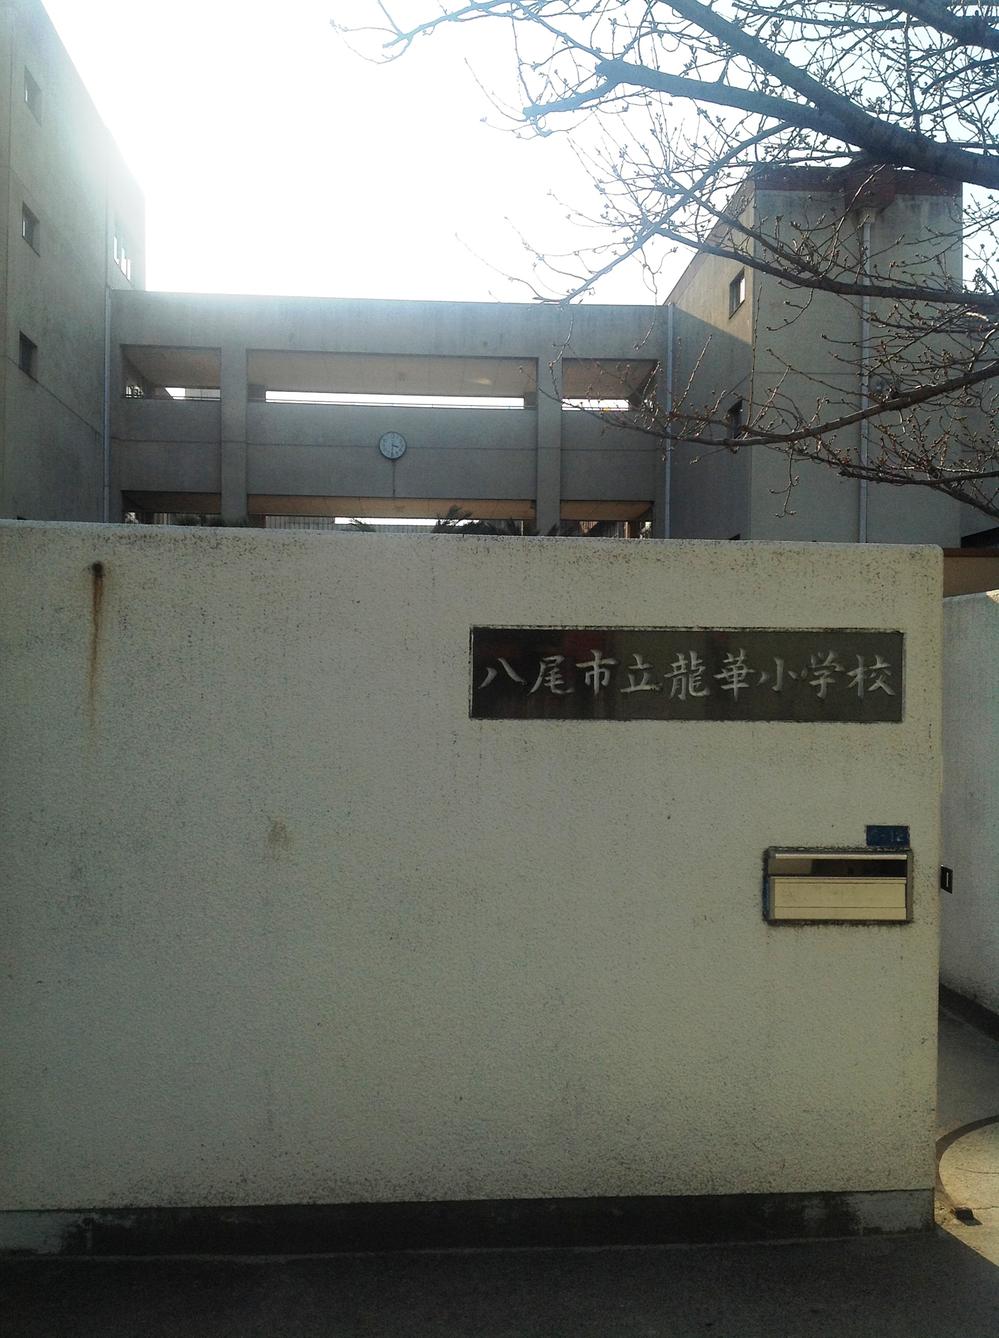 Primary school. Until Yao Municipal Longhua Elementary School 501m Yao Municipal Longhua Elementary School